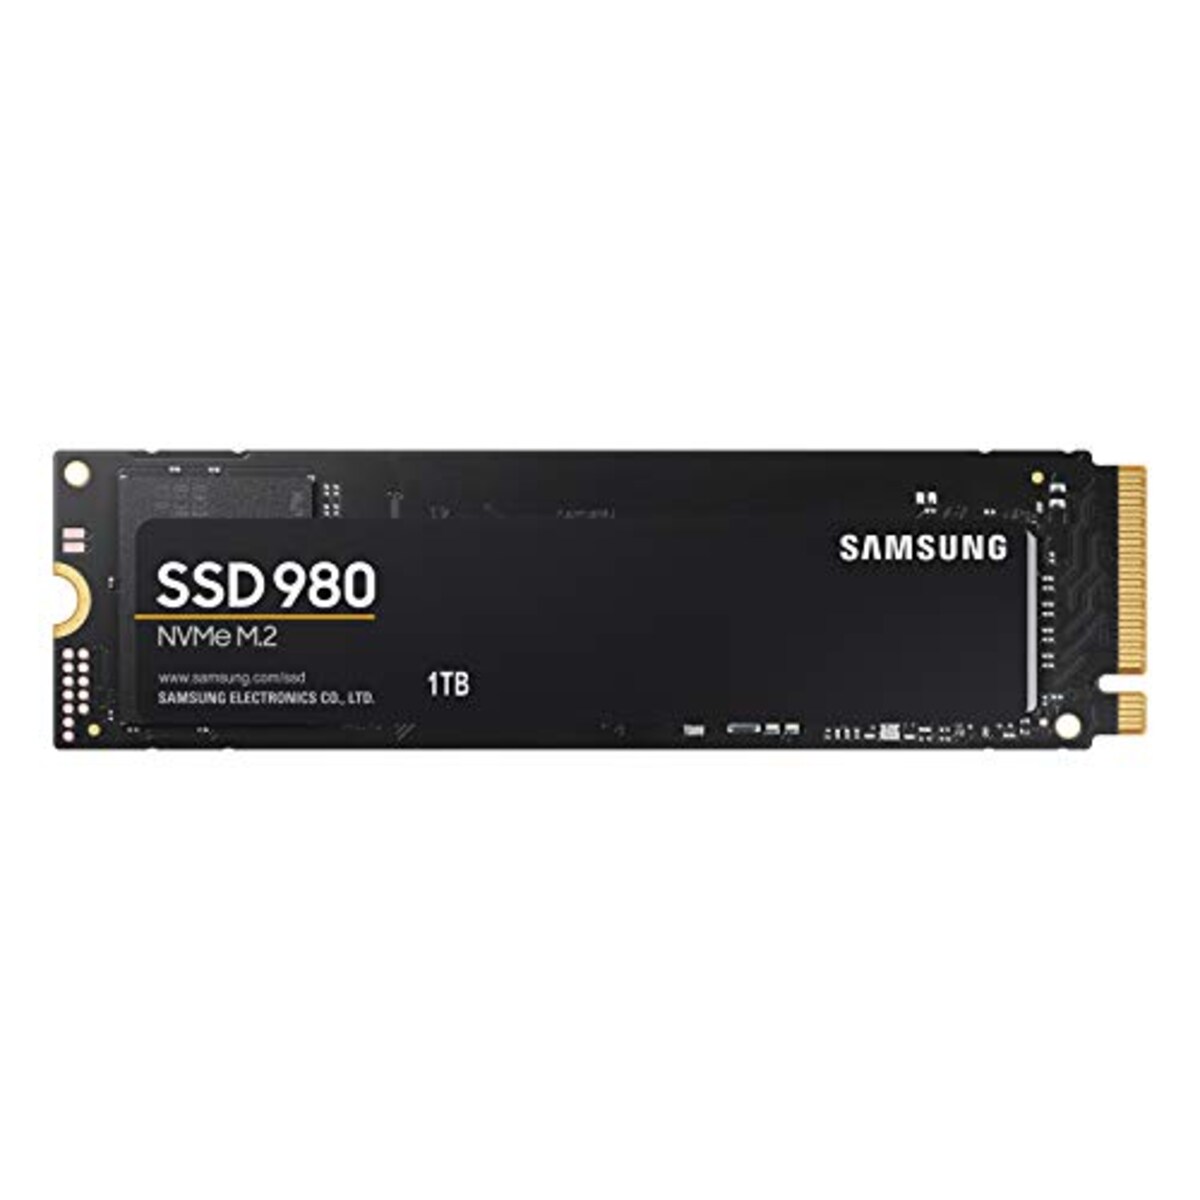 SSD 980